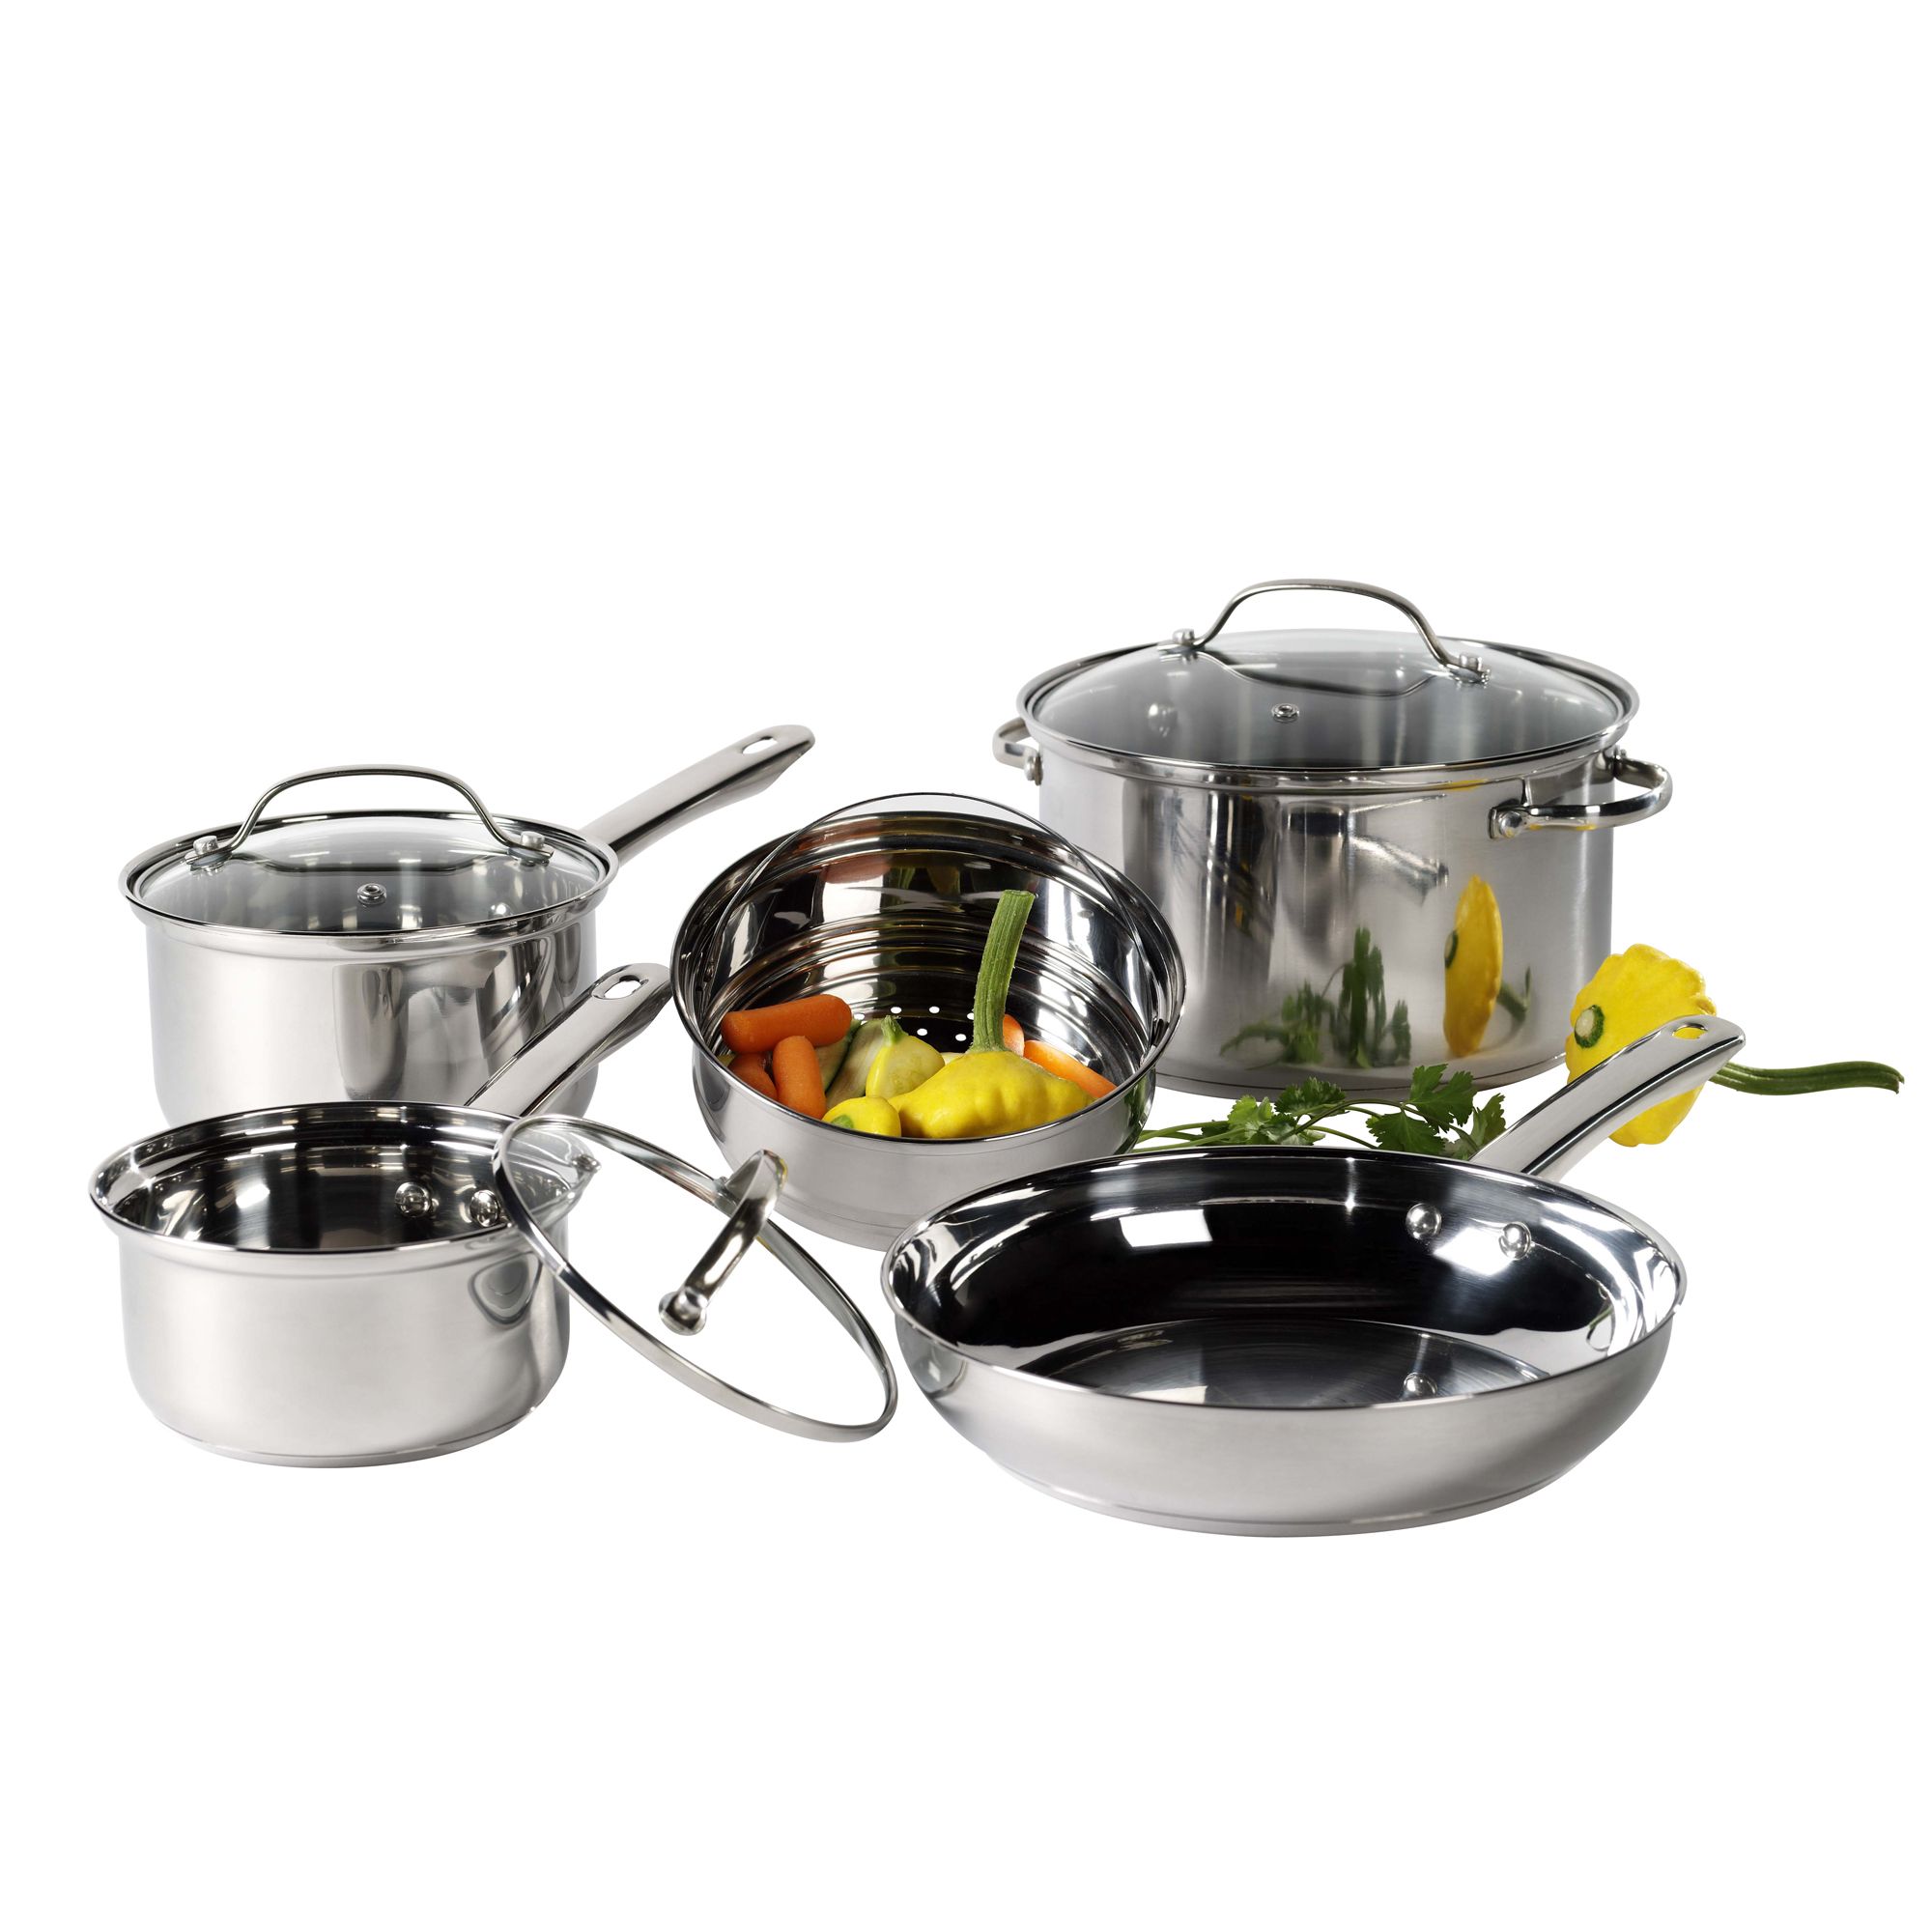 basic-essentials-8-piece-stainless-steel-cookware-set